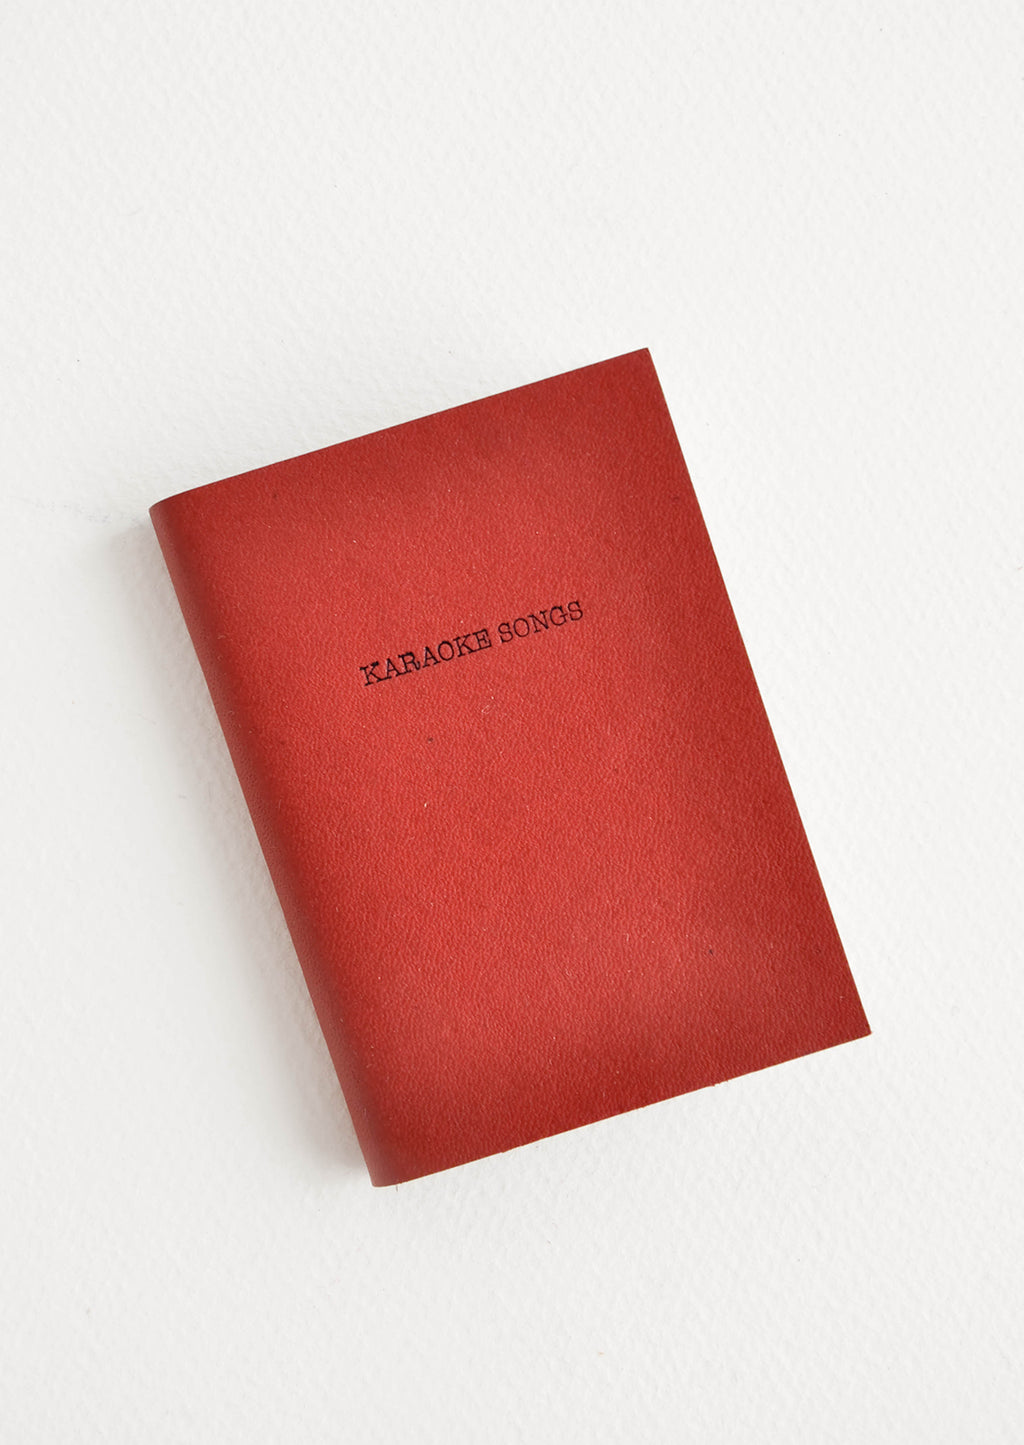 Karaoke Songs / Rust: Mini red notebook featuring text "Karaoke Songs".